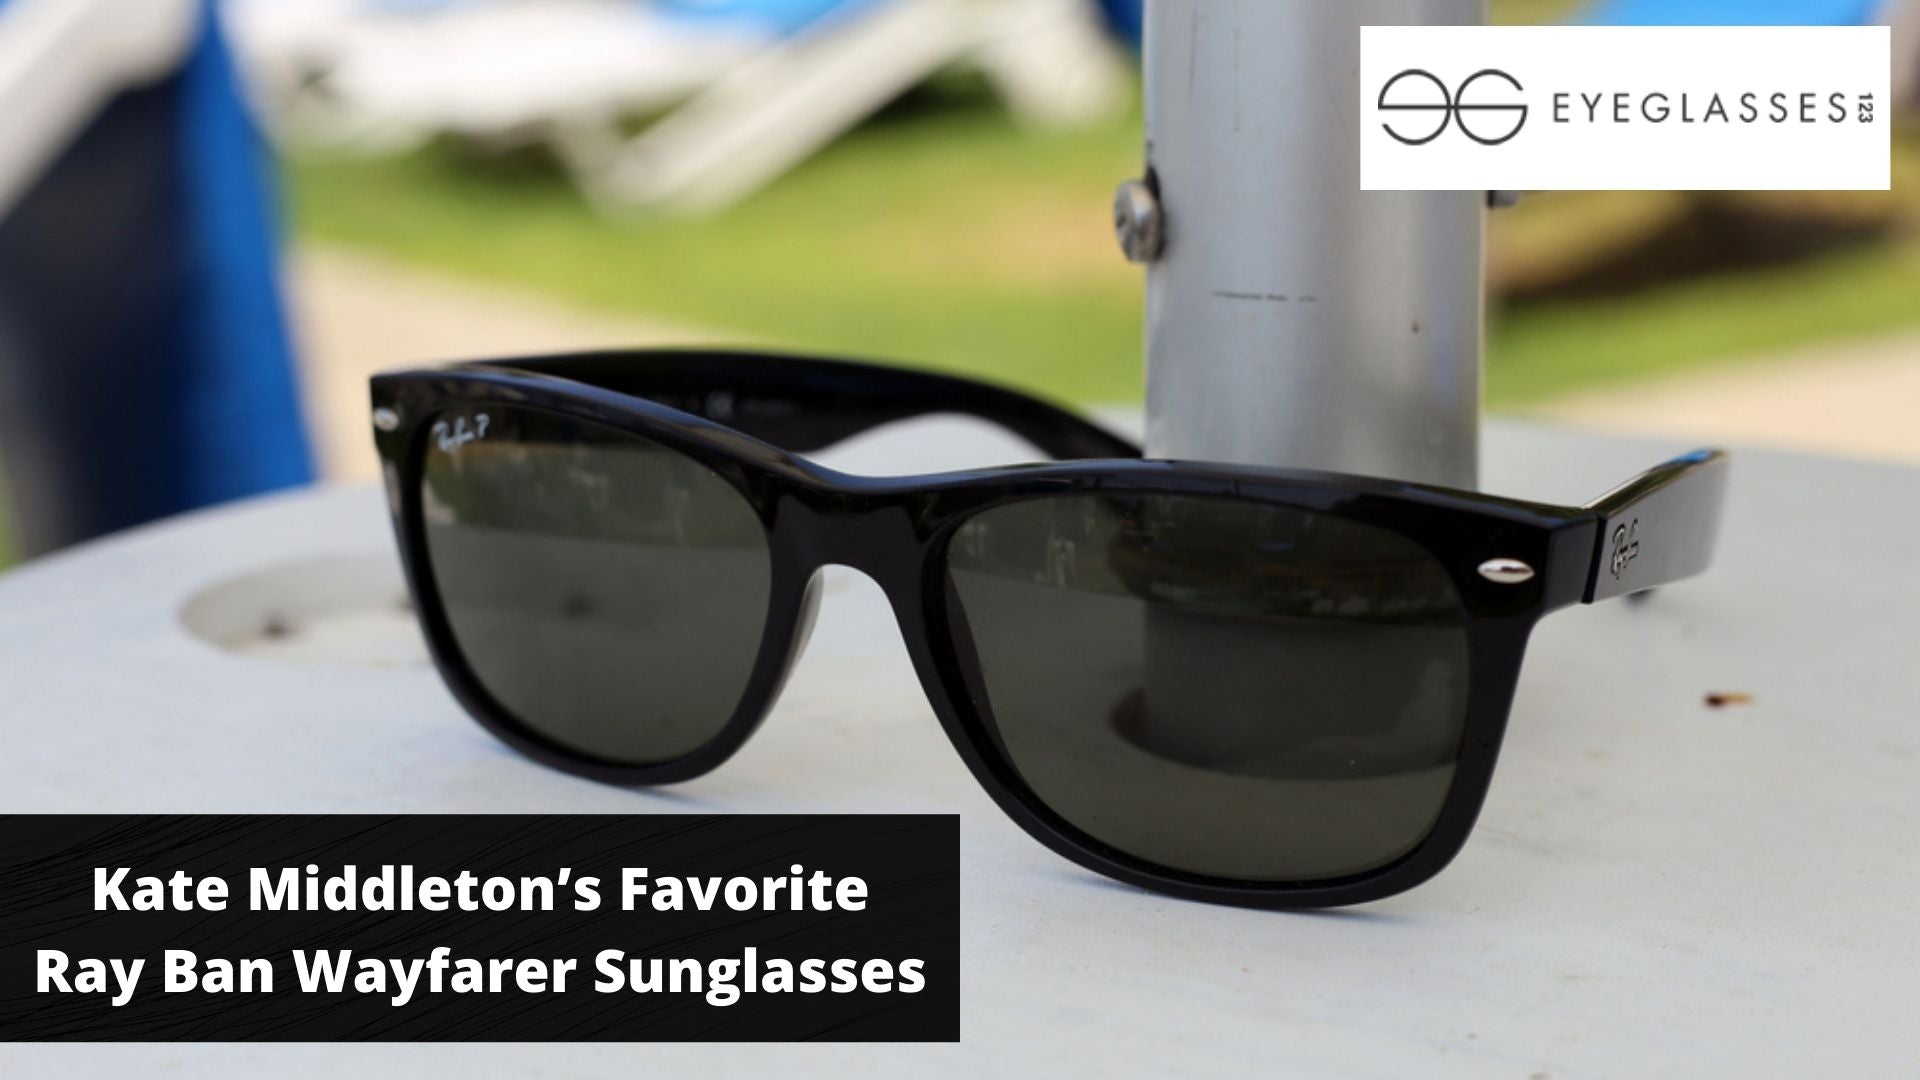 Kate Middleton’s Favorite Ray Ban Wayfarer Sunglasses?